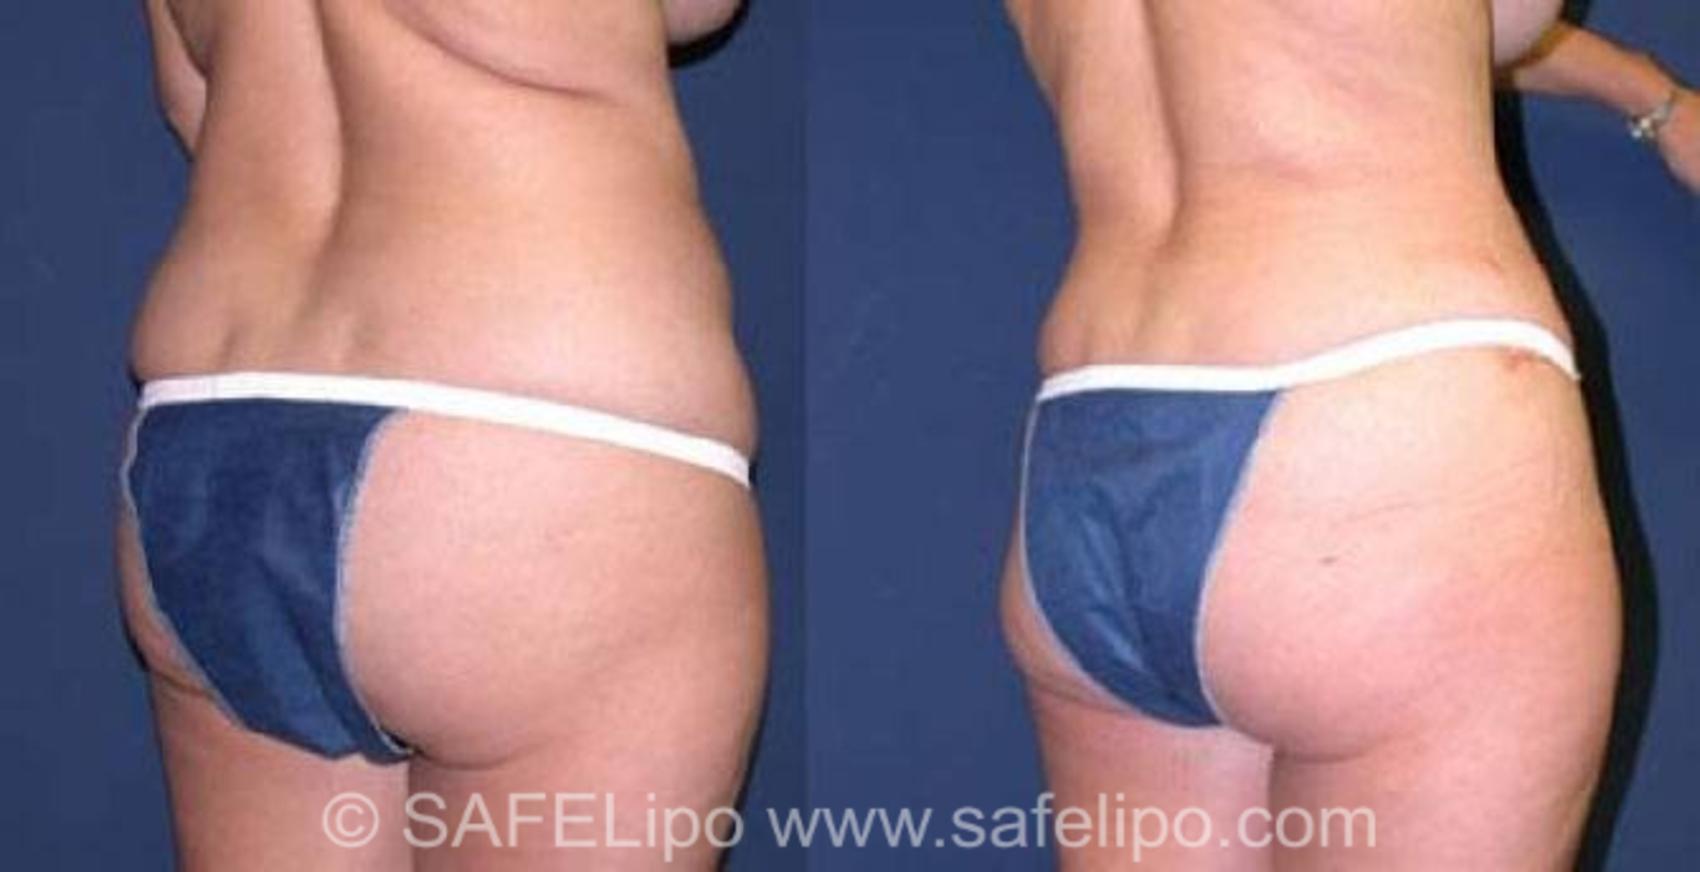 SAFELipoHD® Case 75 Before & After View #7 | SAFELipo®